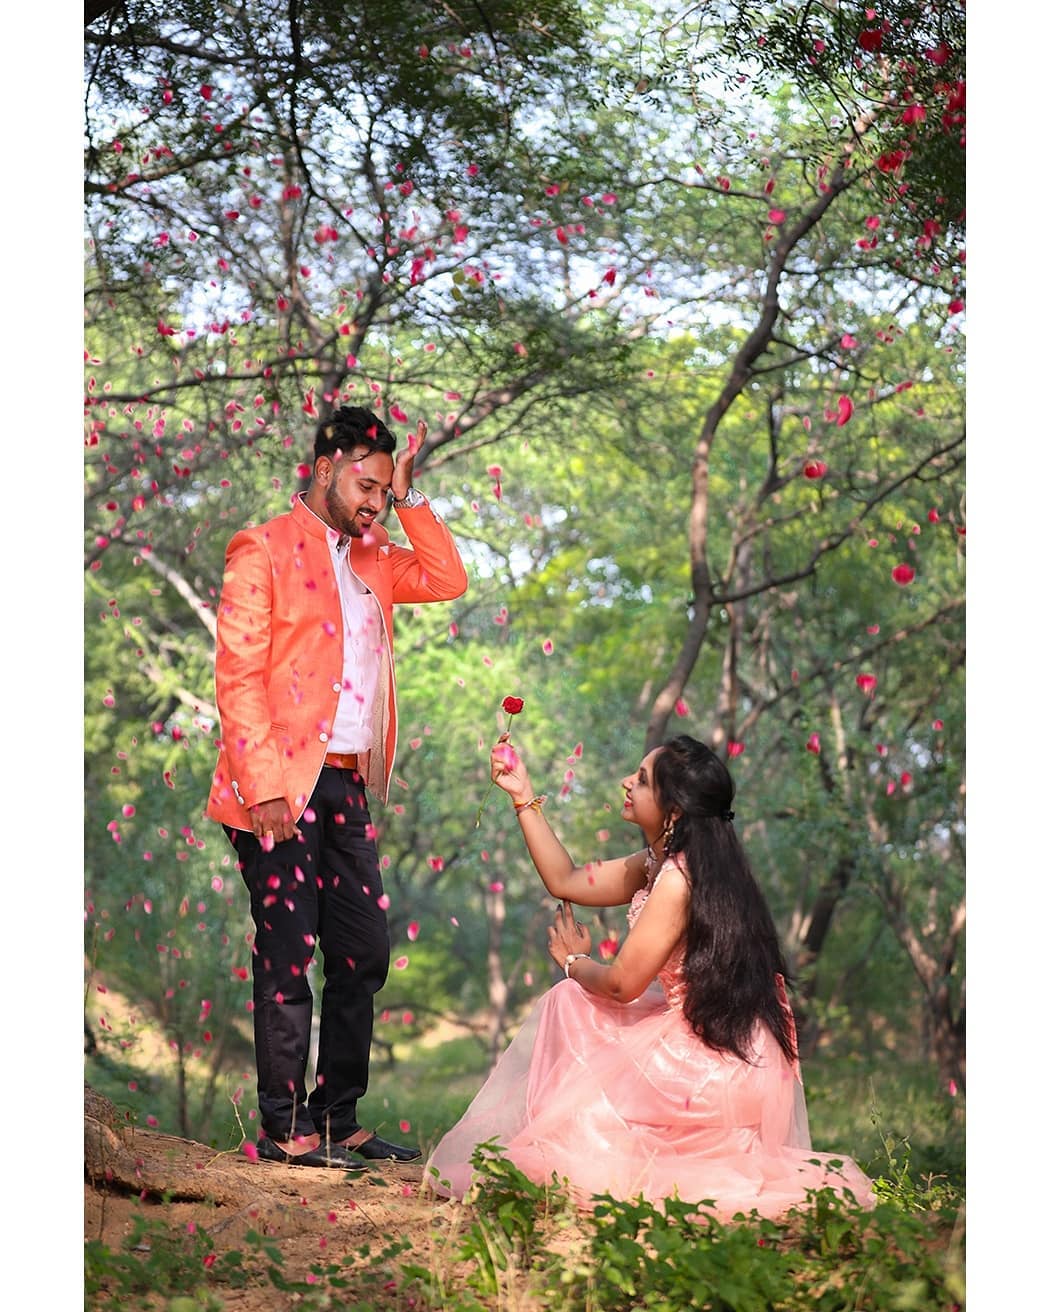 Shower me with love
I will bloom for you forever .❤ 💏💑
.
 Anjali  @anj_tr_2611 + Mihir @mihirr2 .
.
@dip_memento_photography
Prewedding Photography
.
. 
#weddingpictures #wedding #preweddding #photo #indianwedding #wedphotoinspirationi #ahmedabad #ahmedabadprewedding #shaadiseason#weddingbells#weddingz#indiapictures#gujjushaddi #gujratiweddings
#indian_wedding_inspiratio #photographer #candidweddingphotography #weddingph #weddingz #photography #coupleshoot #weddingplz #weddingfables#lfl #dipmementophotography #9924227745 #l4l#f4f  @indianstreetfashion @weddingz.in @indian_wedding_bliss
@weddingsutra @wedmegood @bridalaffairind @theweddingbrigade @weddingplz @weddingfables @indian_wedding_inspiration @weddingdiary @_punjabi_weddings @dulhaanddulhan @thebridesofindia @indianweddings @weddingdream @indianweddingbuzz @shaadisaga @zo_wed @thinkshaadi